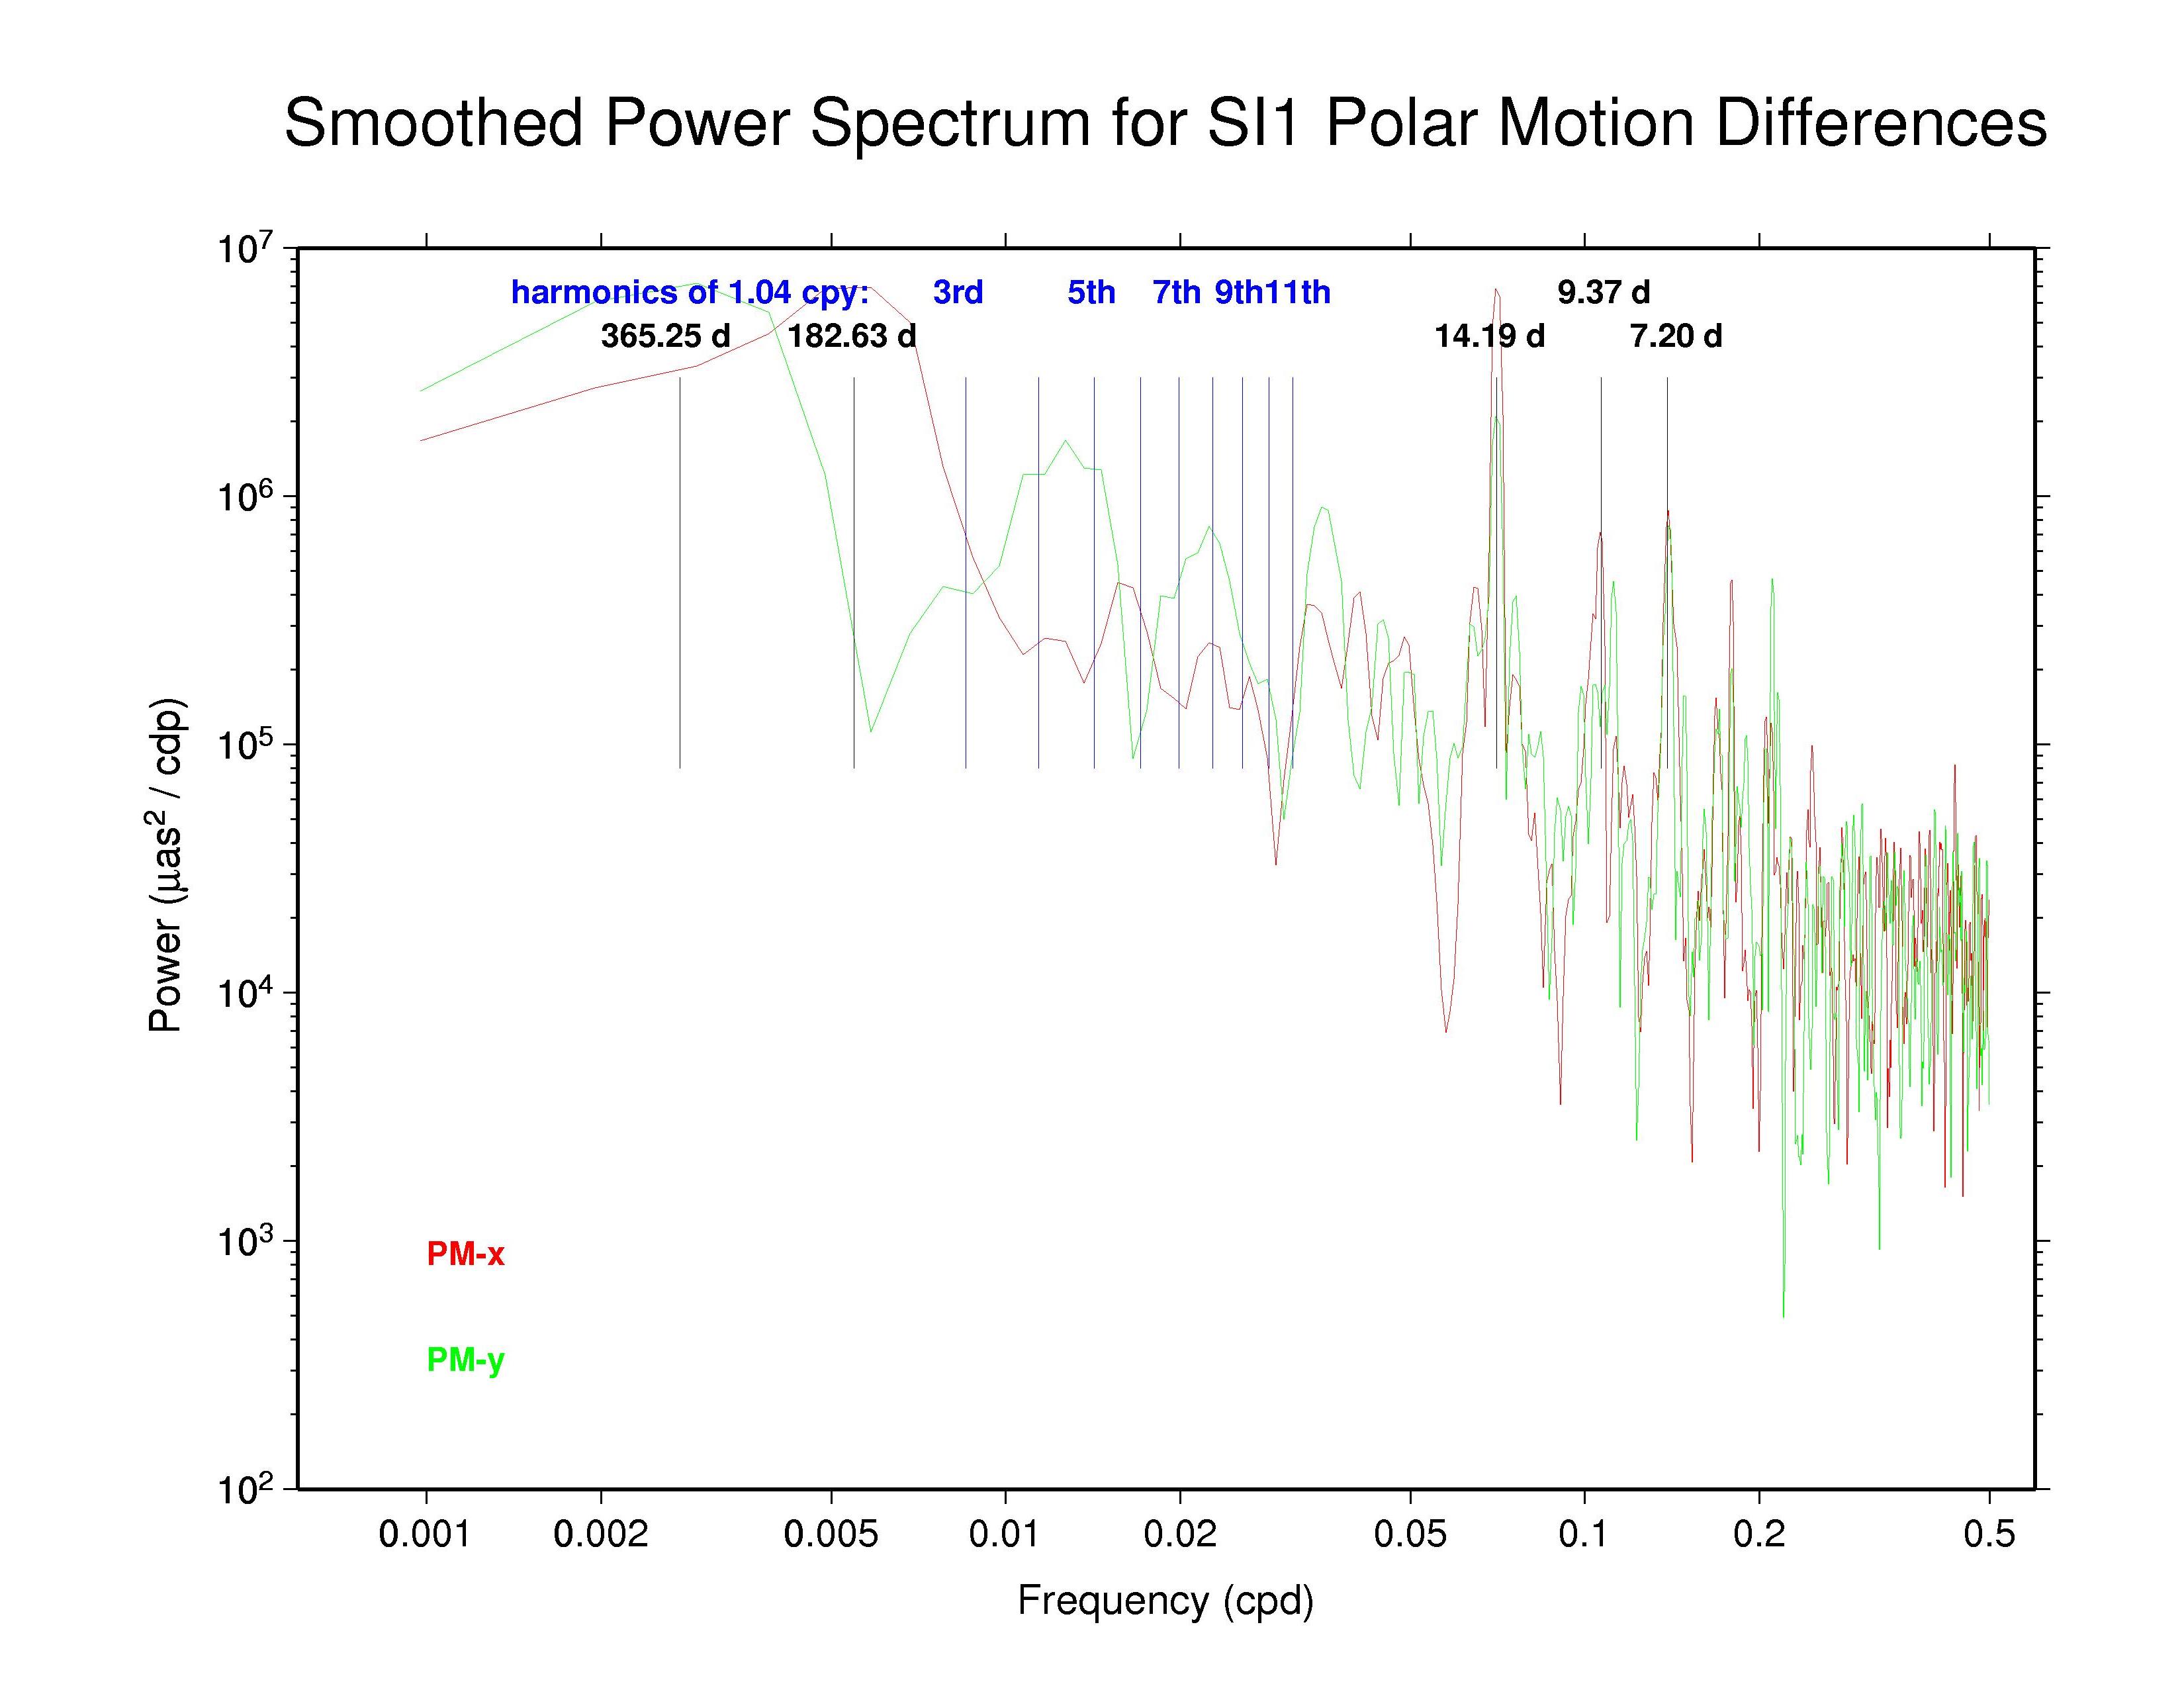 SIO polar motion discontinuities